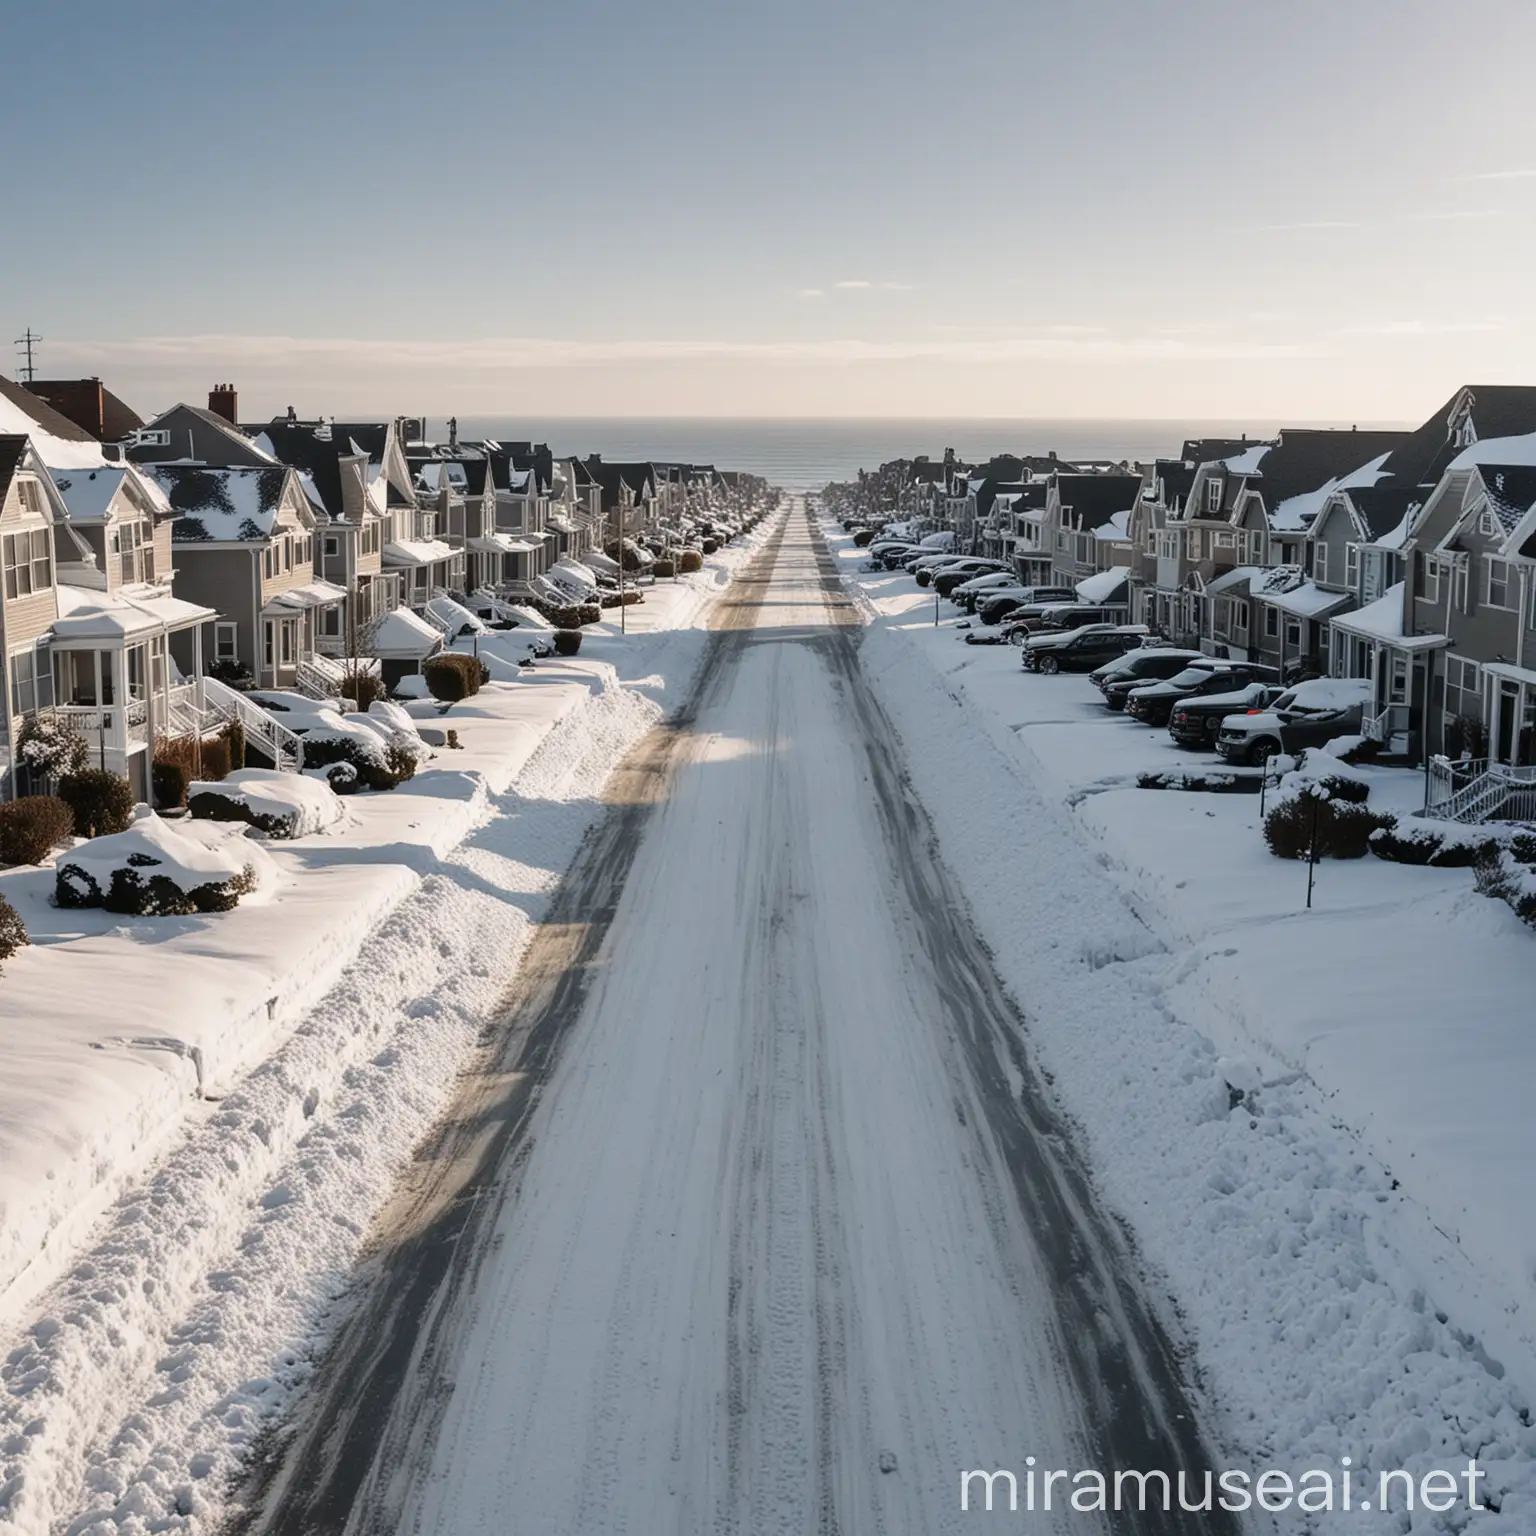 Snowy American Suburban Street with Ocean View